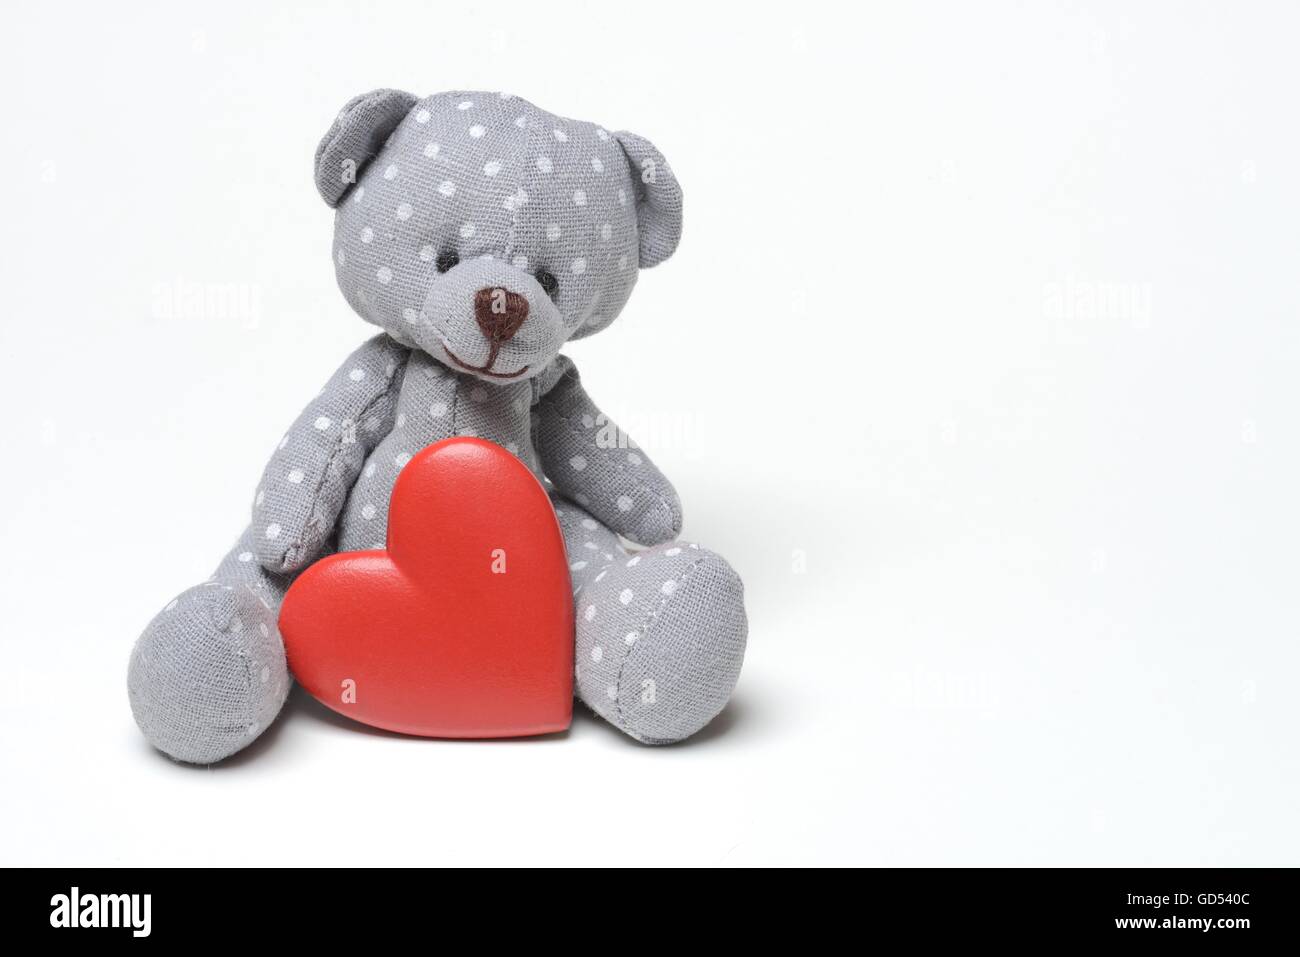 Teddybear with red heart Stock Photo